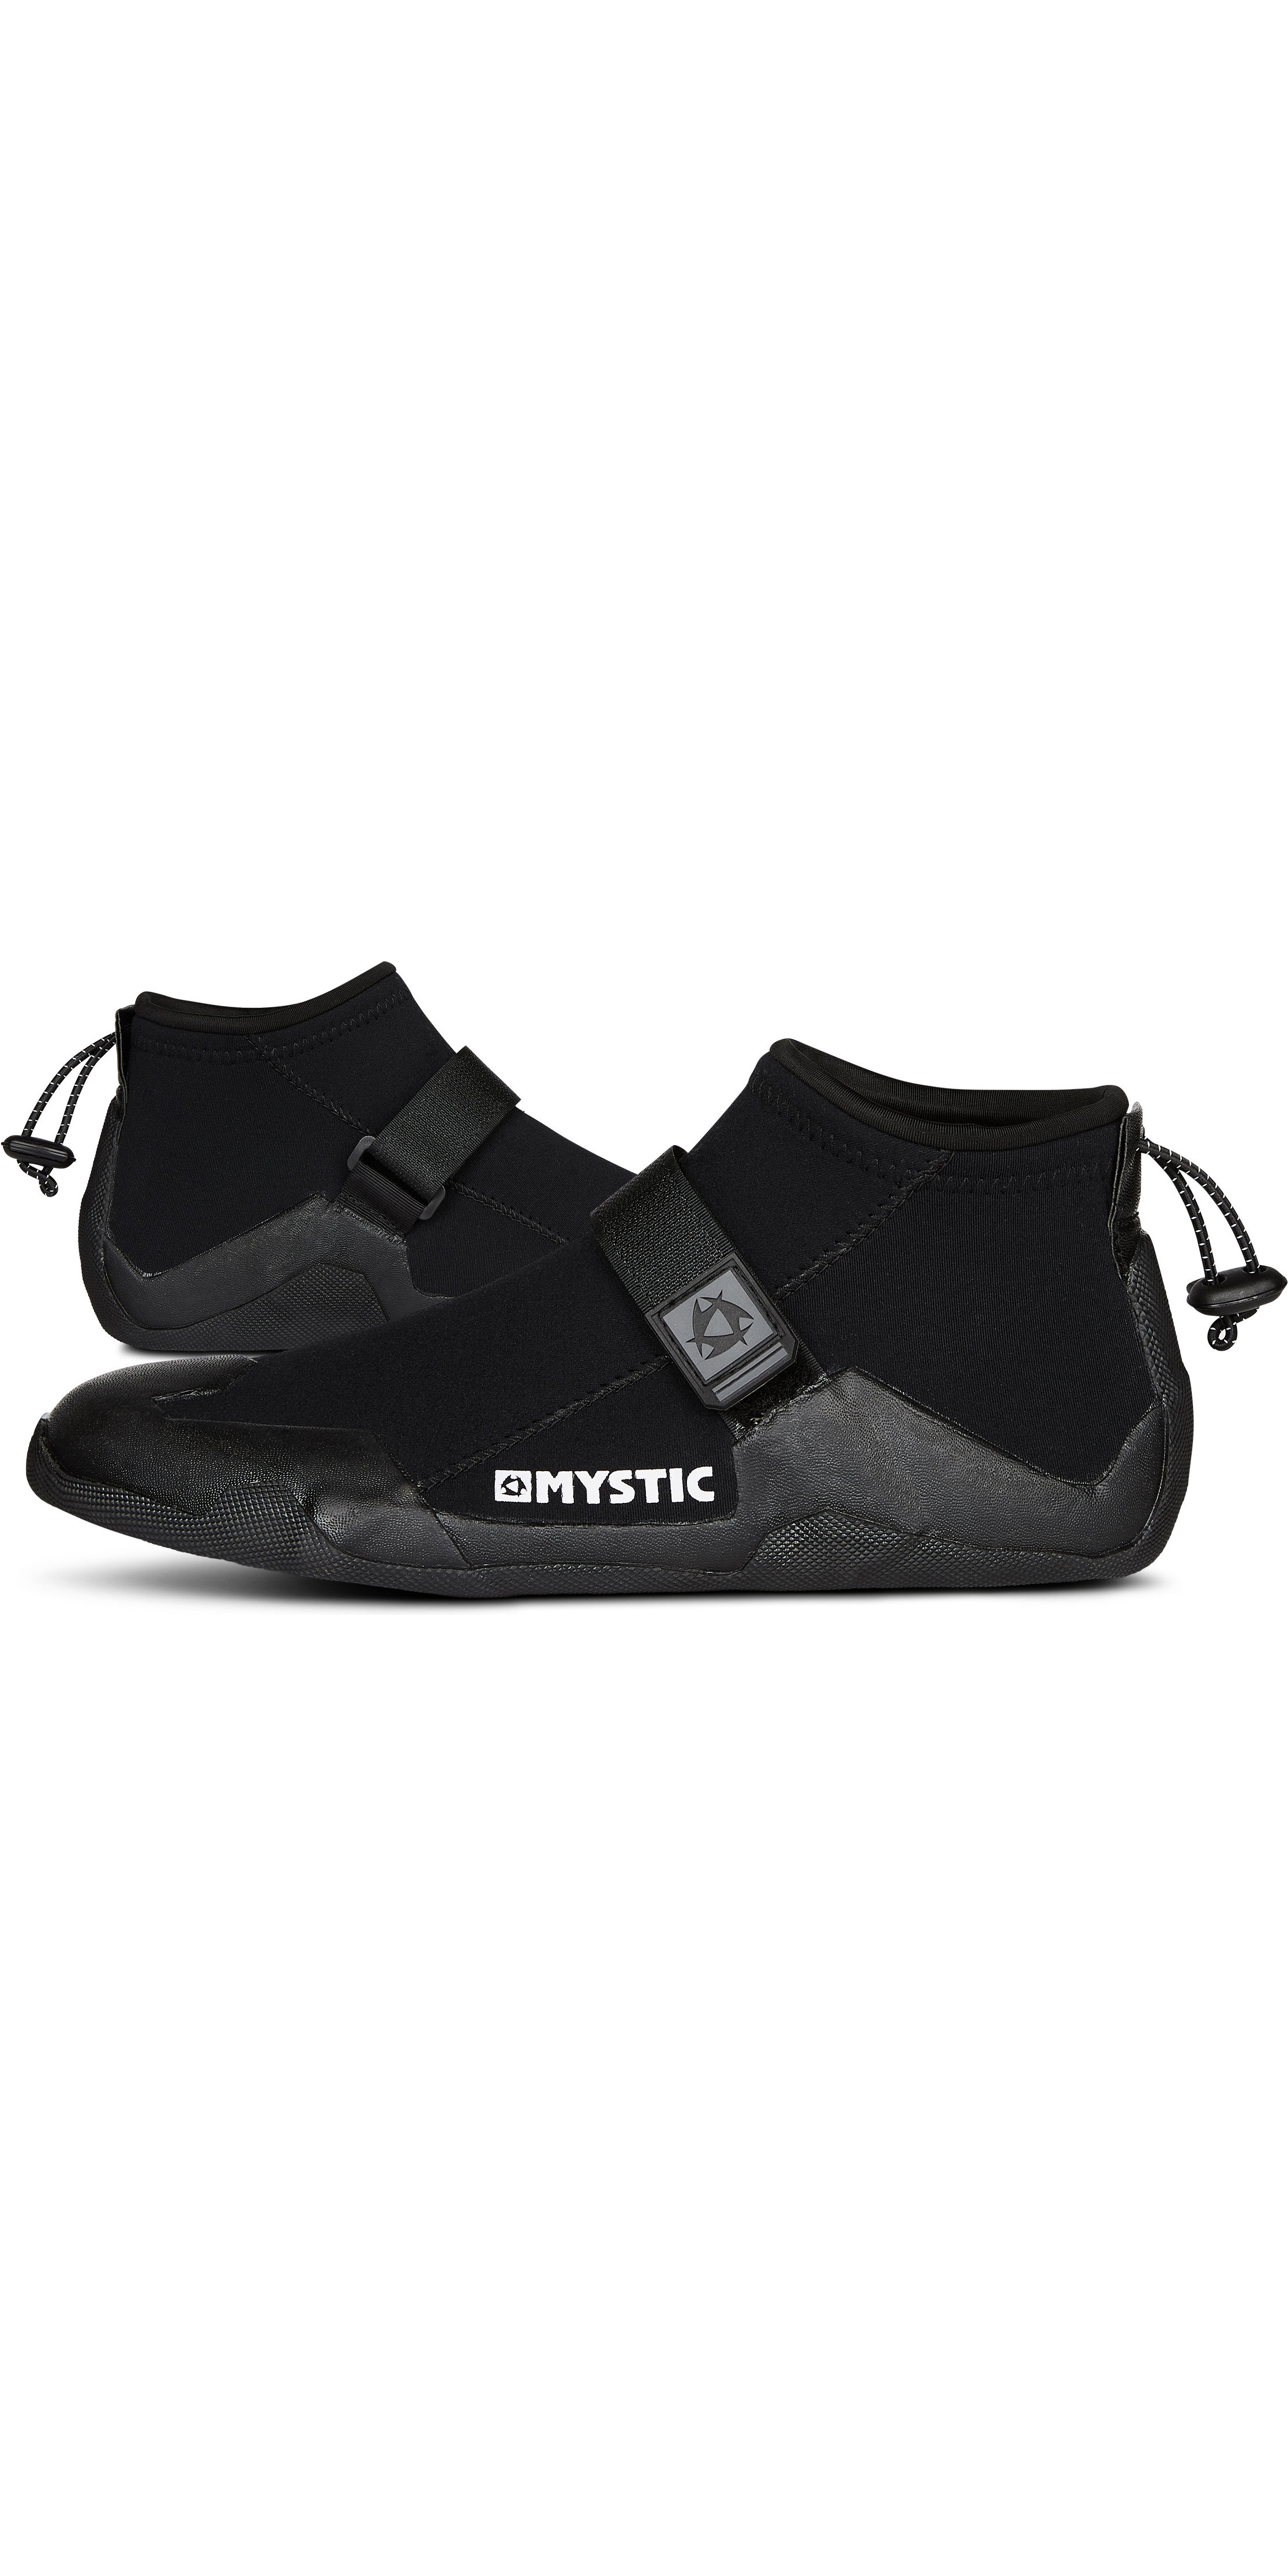 Mystic Neoprenschuhe Star Shoe 3mm Round Toe 900-Black 2021 